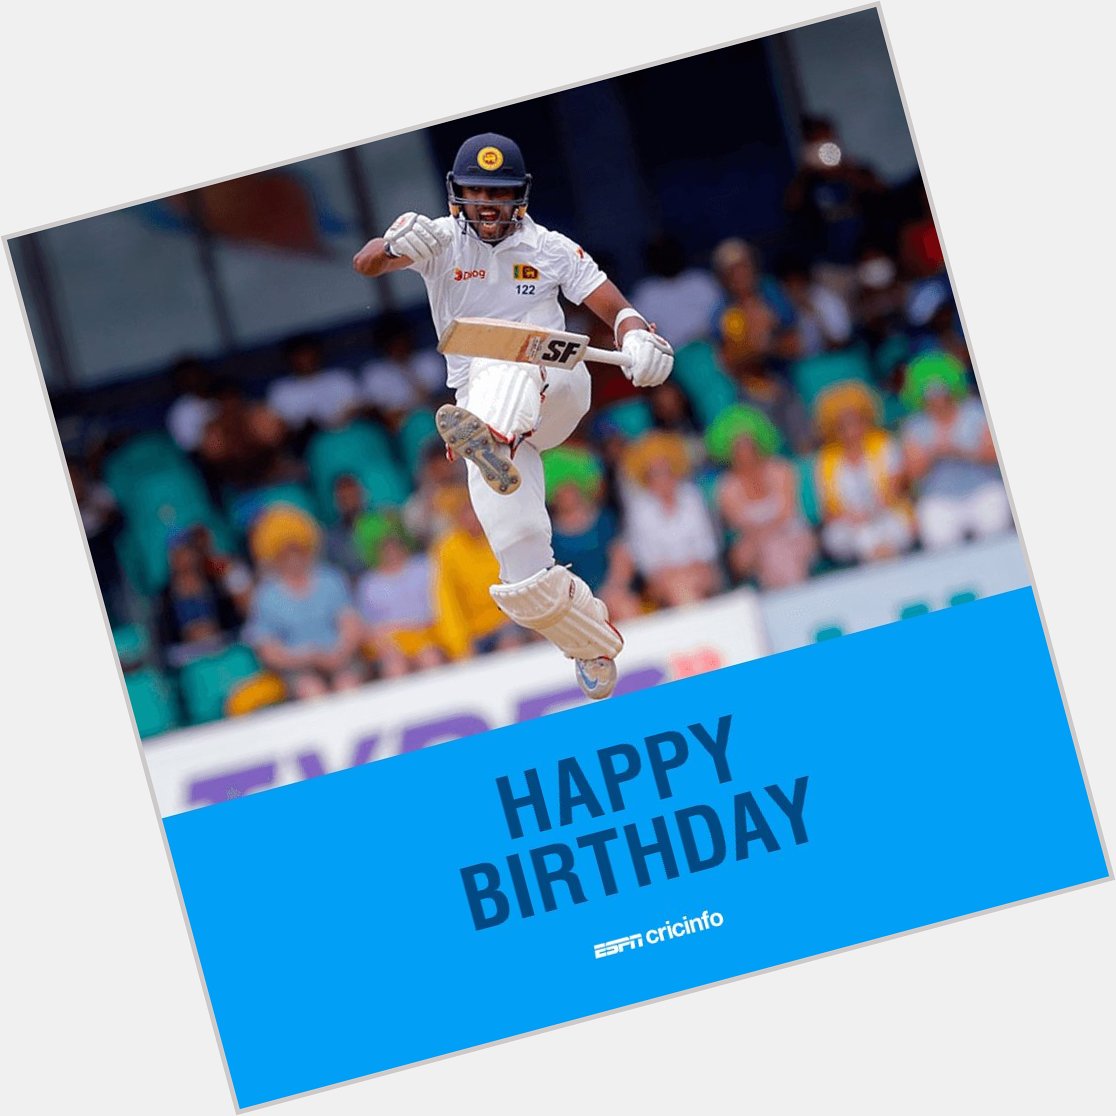  Happy birthday to Sri Lanka Test captain Dinesh Chandimal! 

 